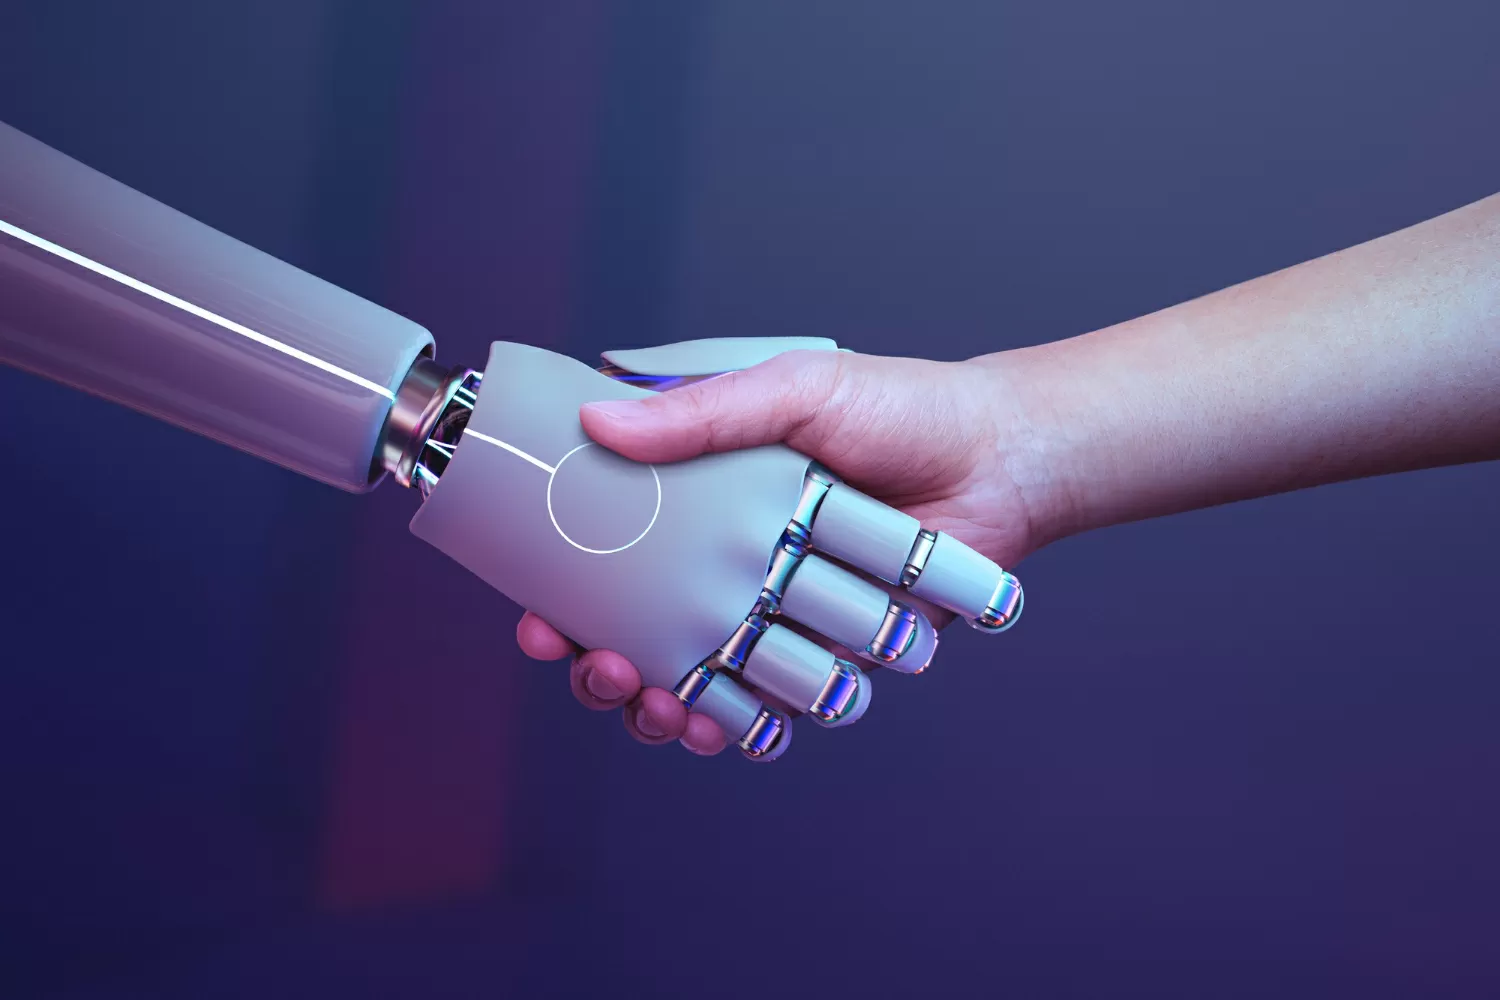 Priorita bassa umana stretta di mano del robot era digitale futuristica